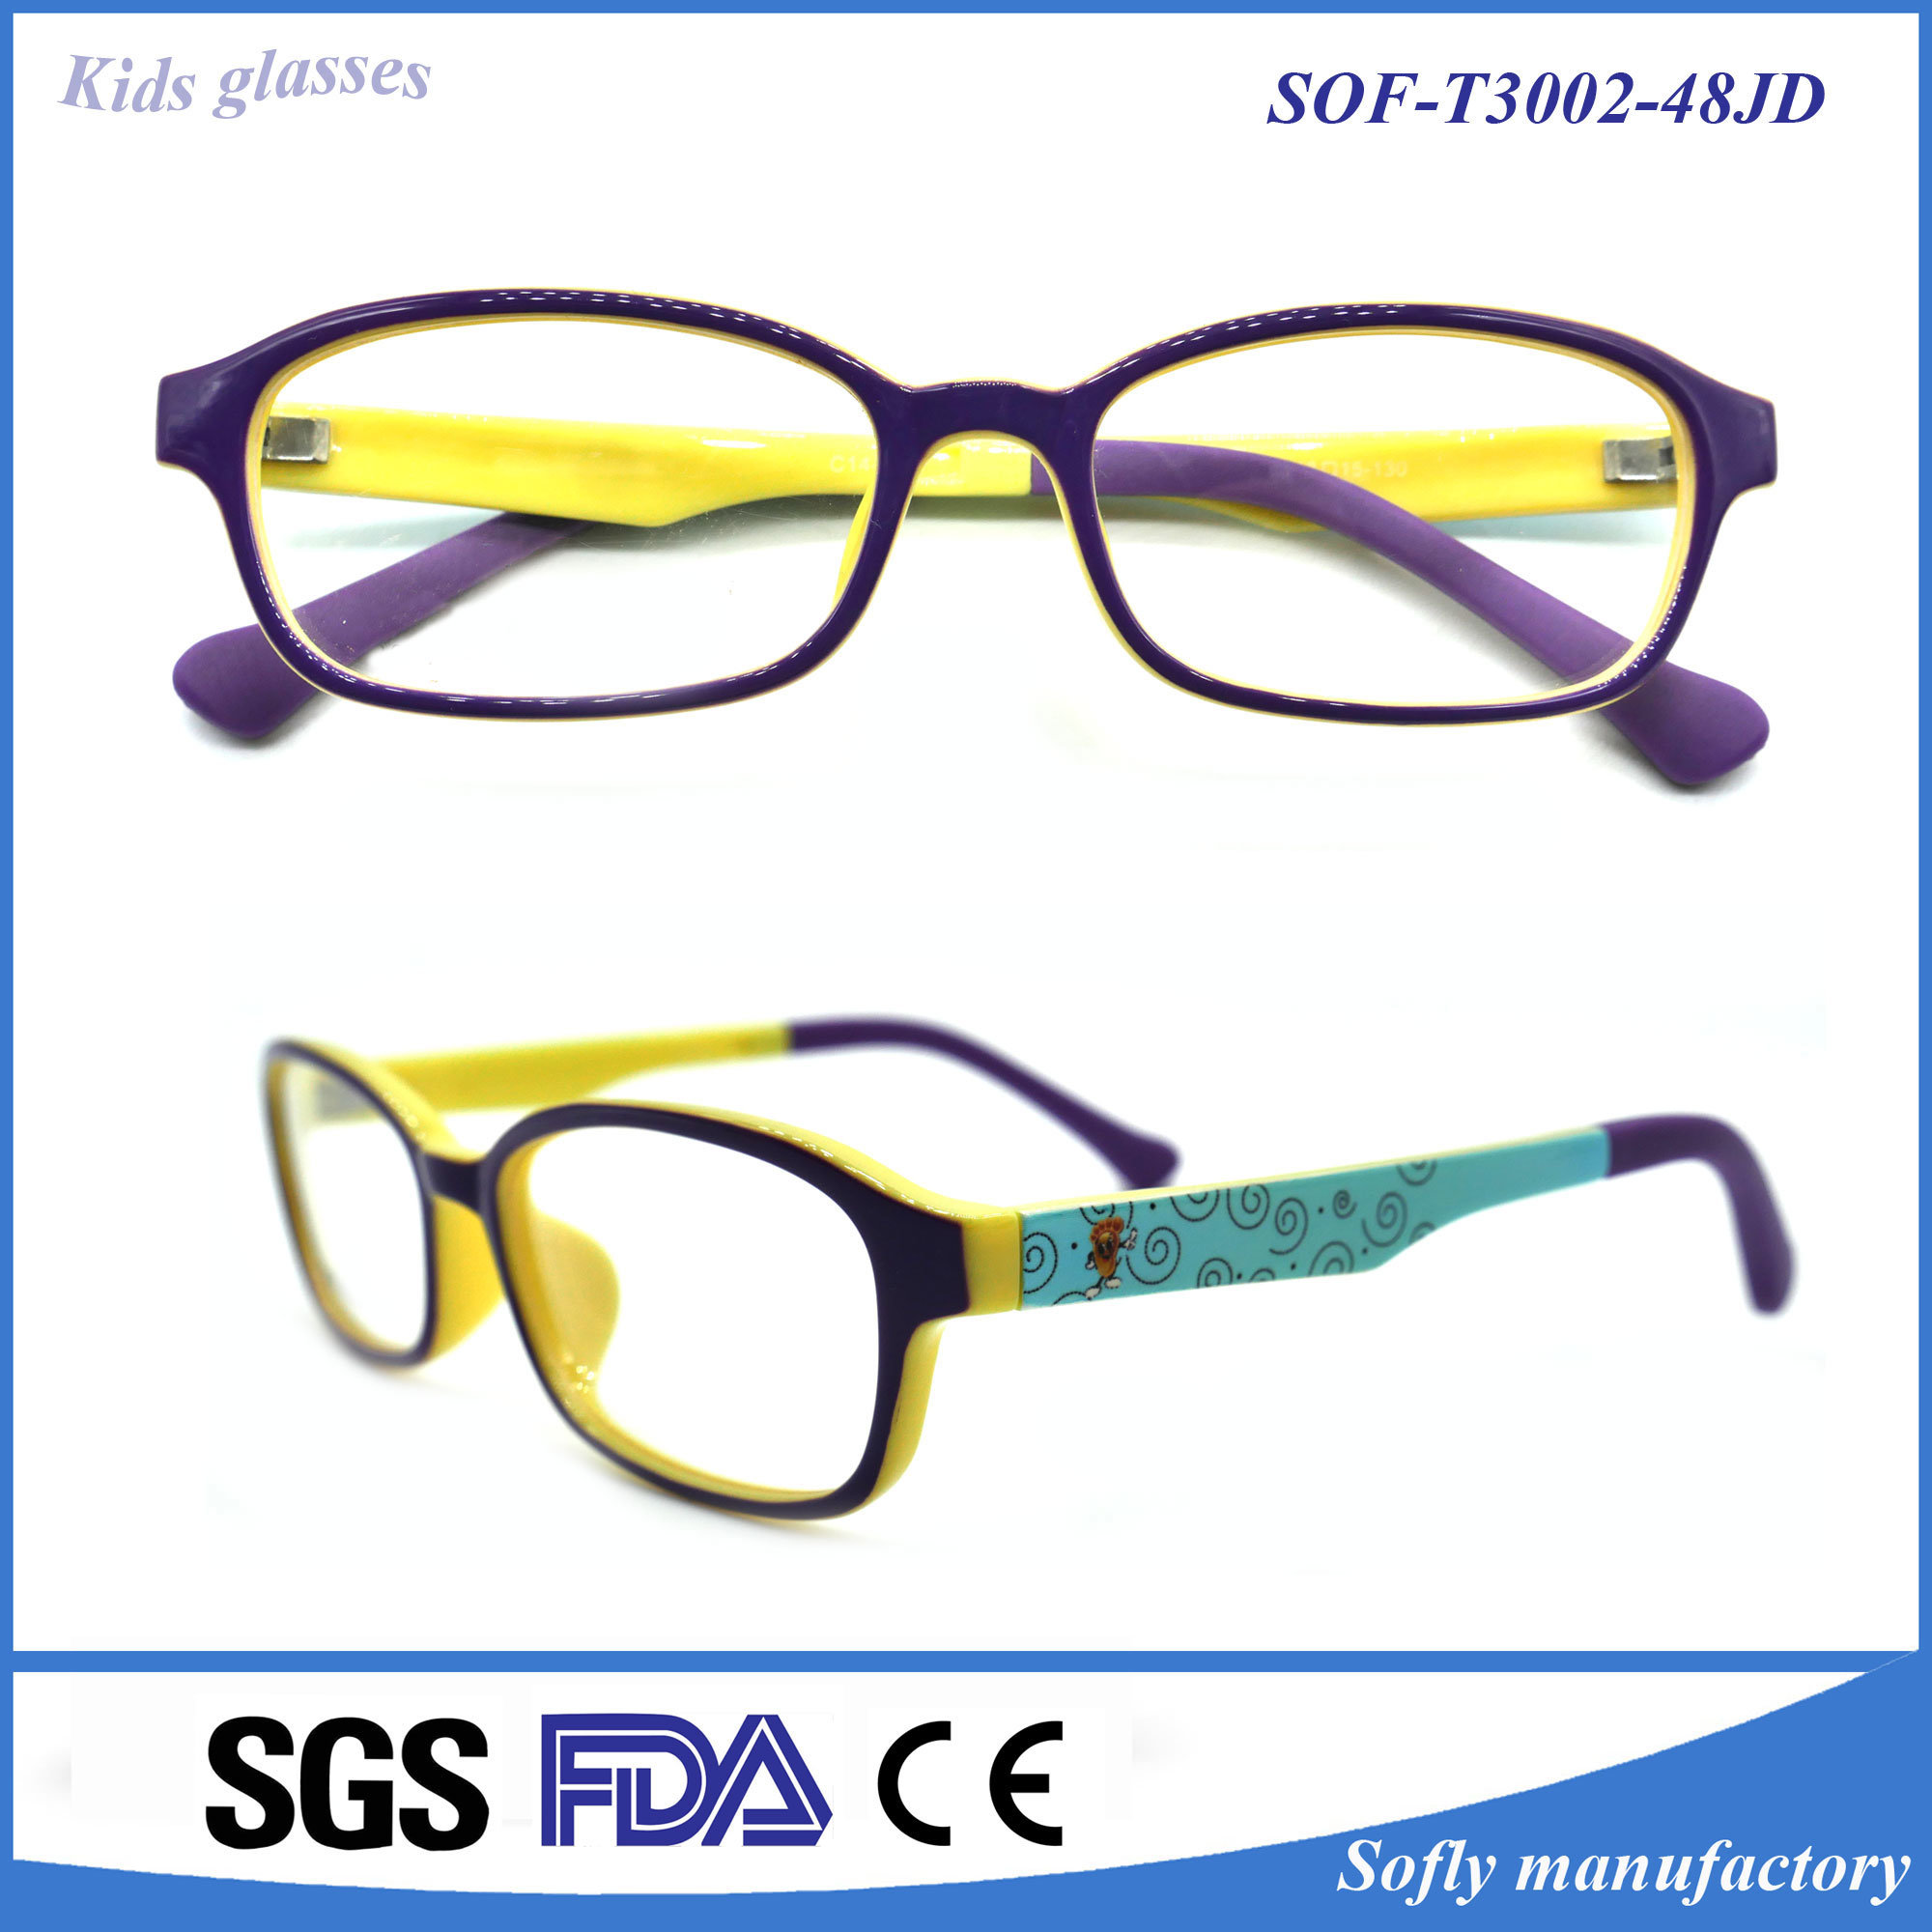 Wholesale Direct Children's Series Tr90 Frame Glasses Frame